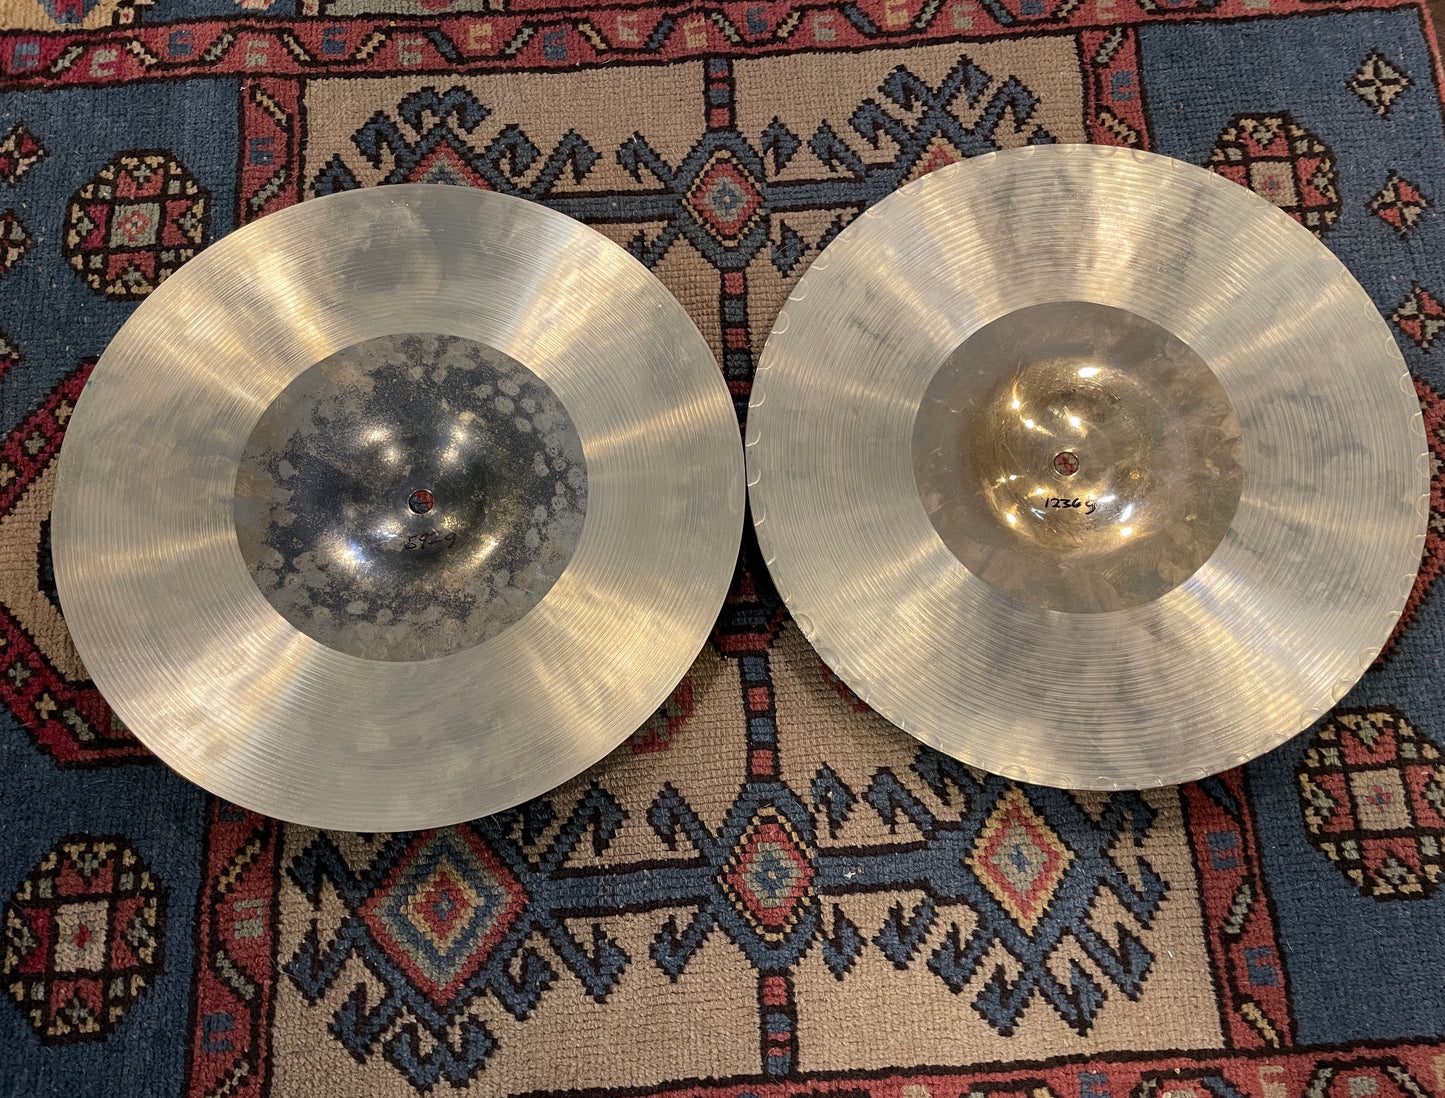 13 1/4" Zildjian K Custom Hybrid Hi-Hat Cymbal Pair 892g/1236g 13.25"